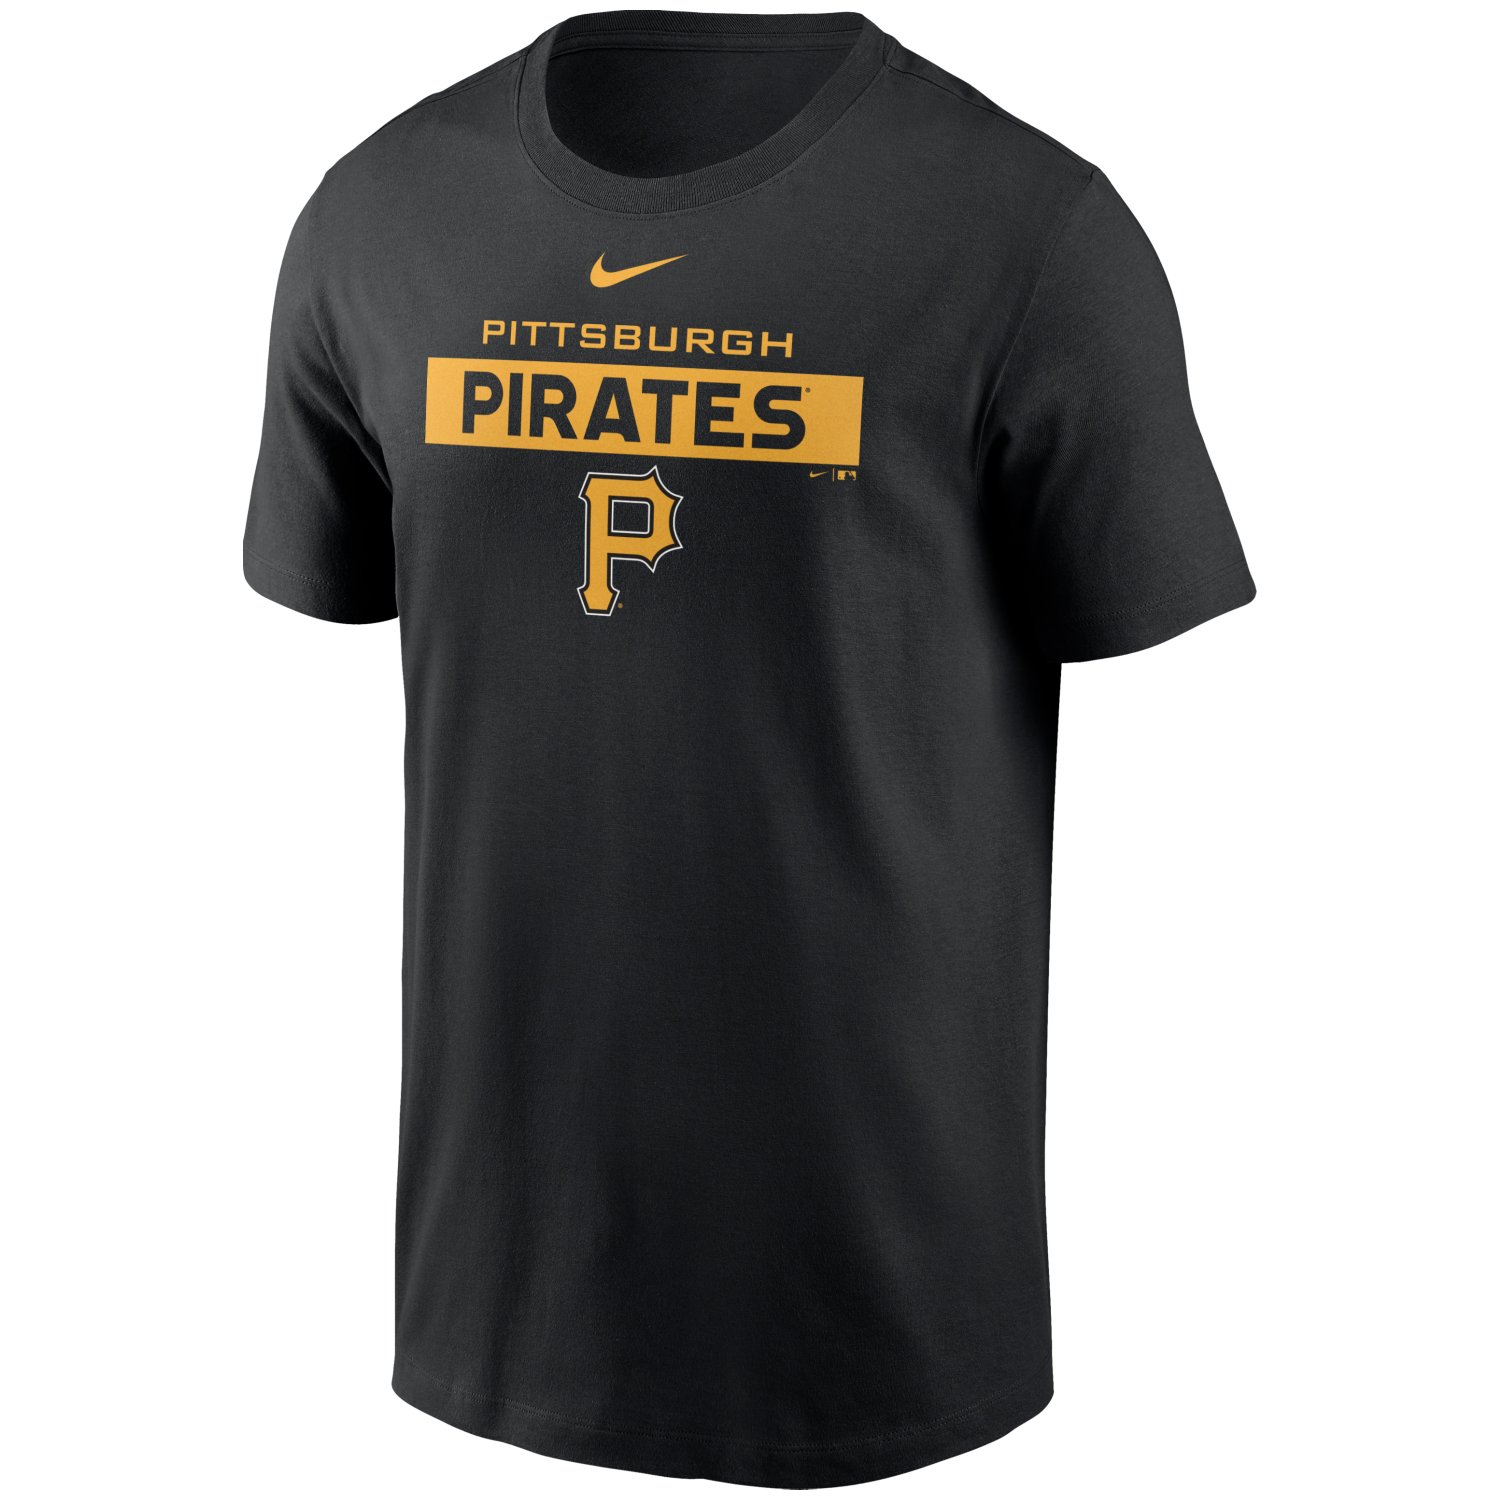 Nike MLB Essential Shirt - Pittsburgh Pirates schwarz | Shirts ...